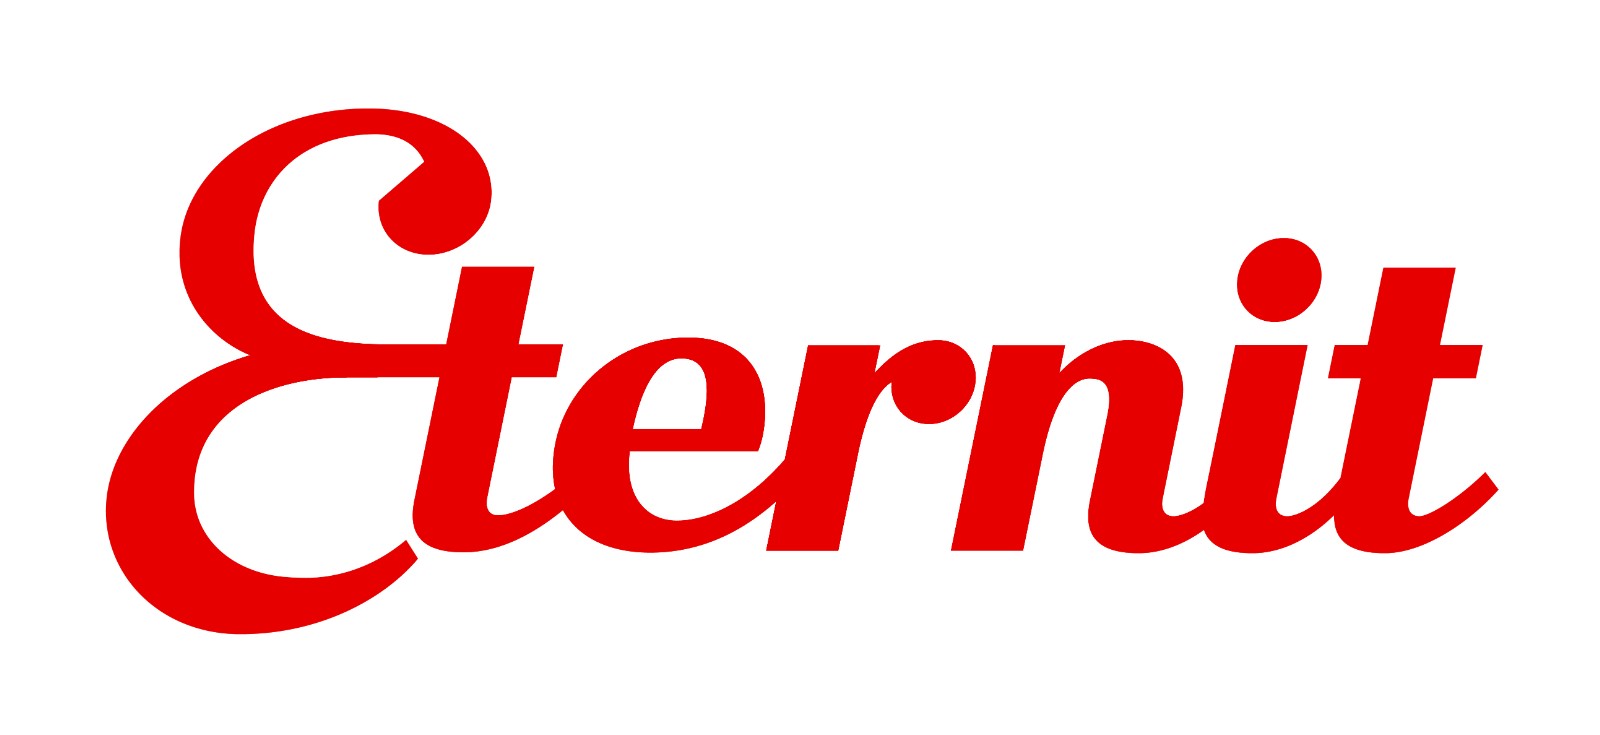 Eternit logo